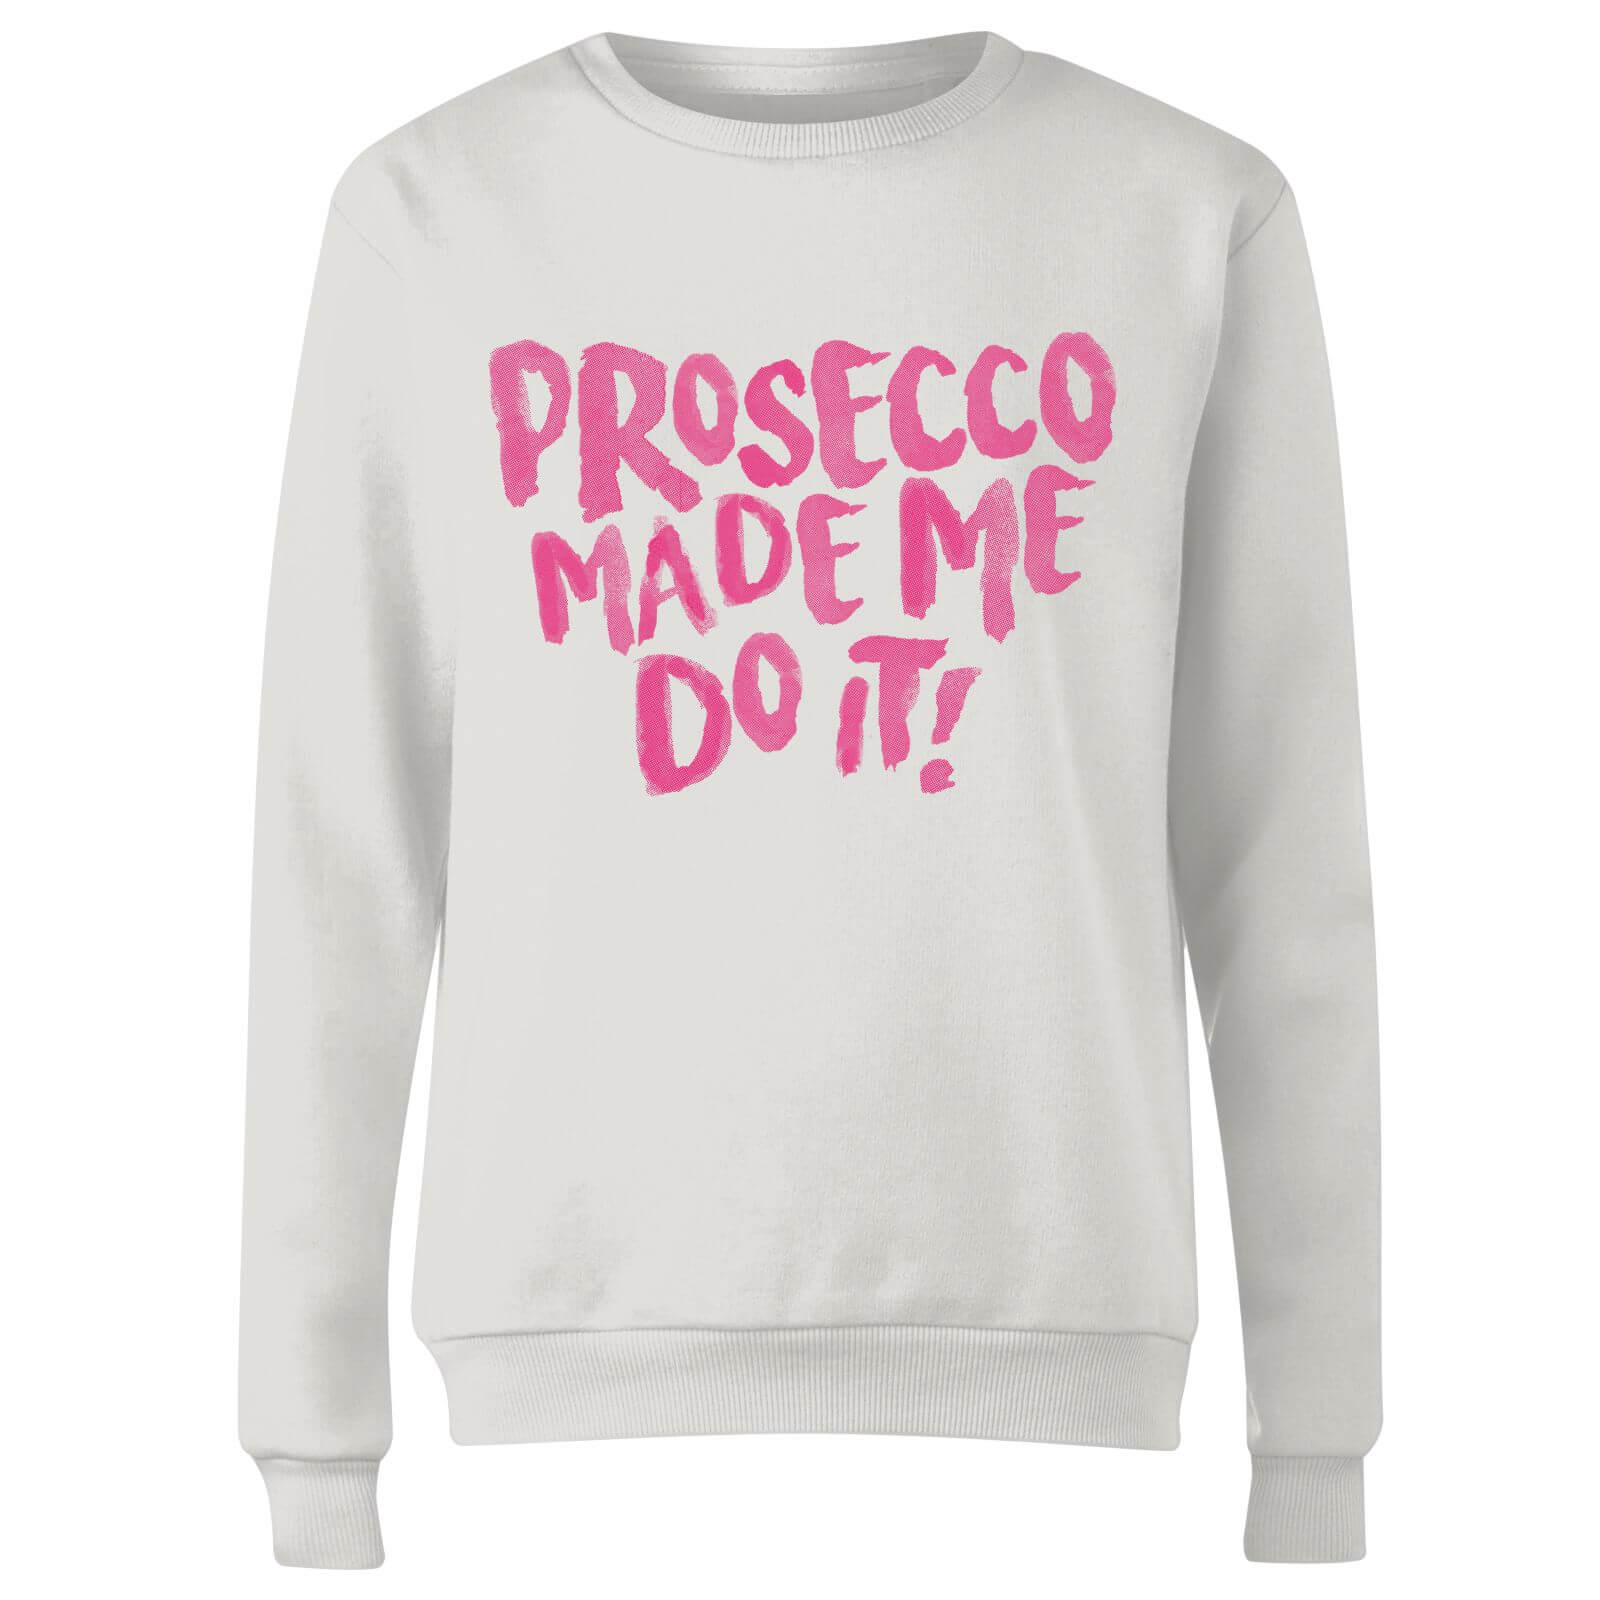 Prosecco Made Me Do it Women's Sweatshirt - White - S - White